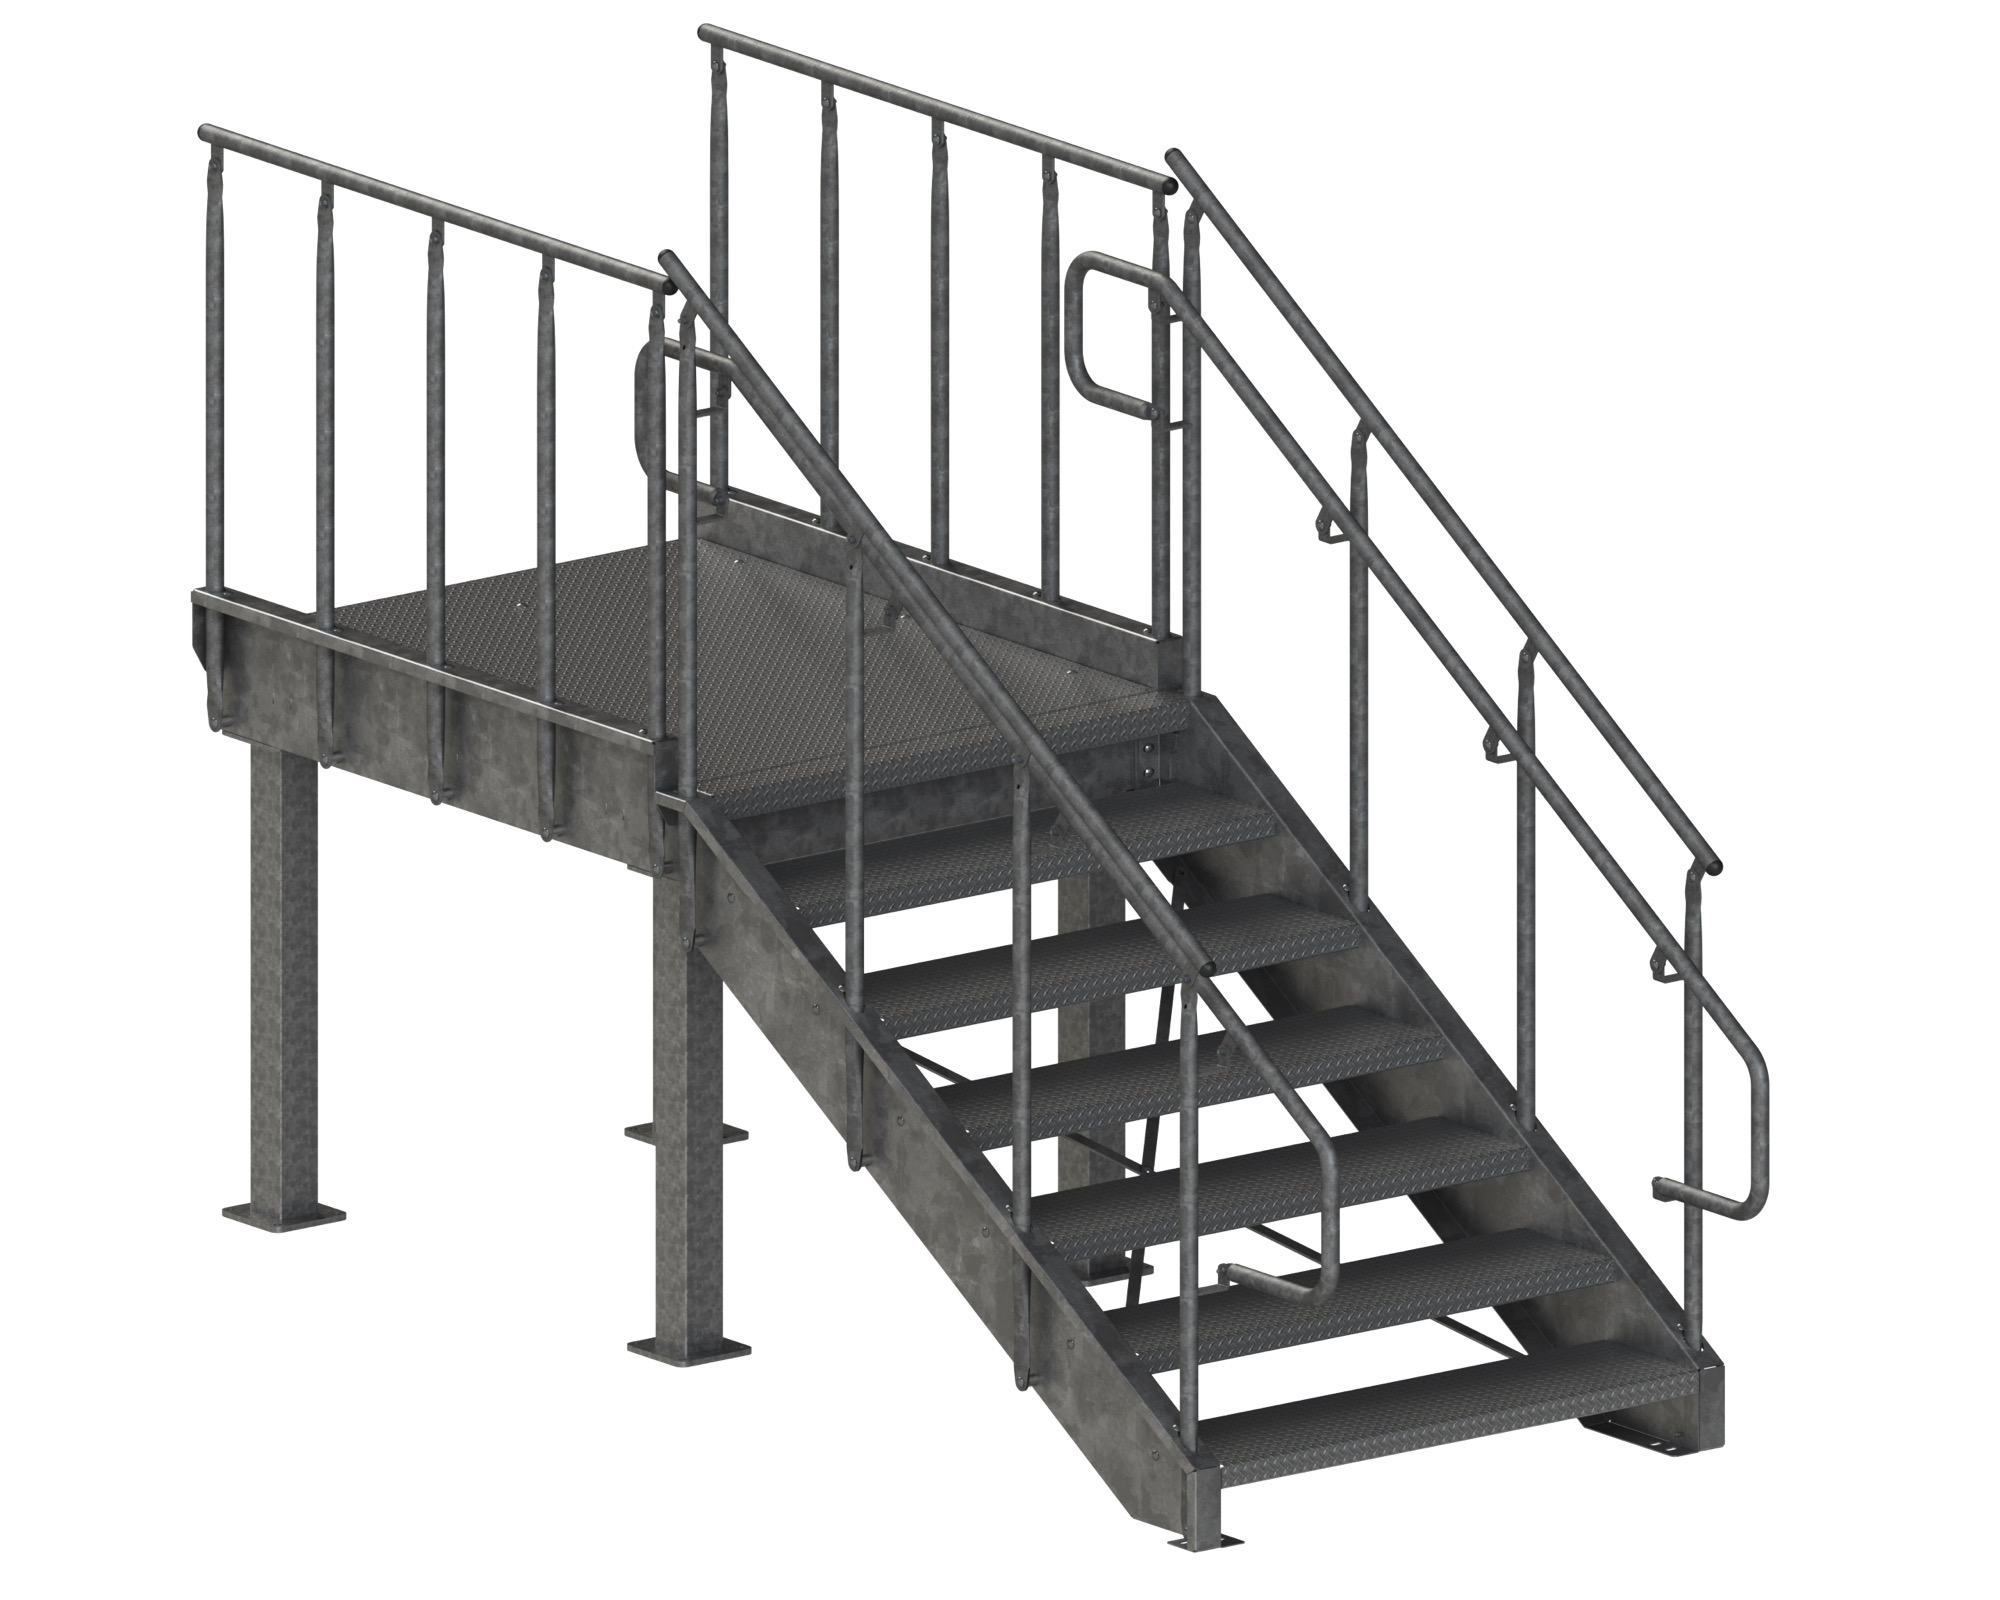 Loading Dock Stairs, Steel, Galvanized, Diamond Plate, IBC-Industrial, Door Swing Platform